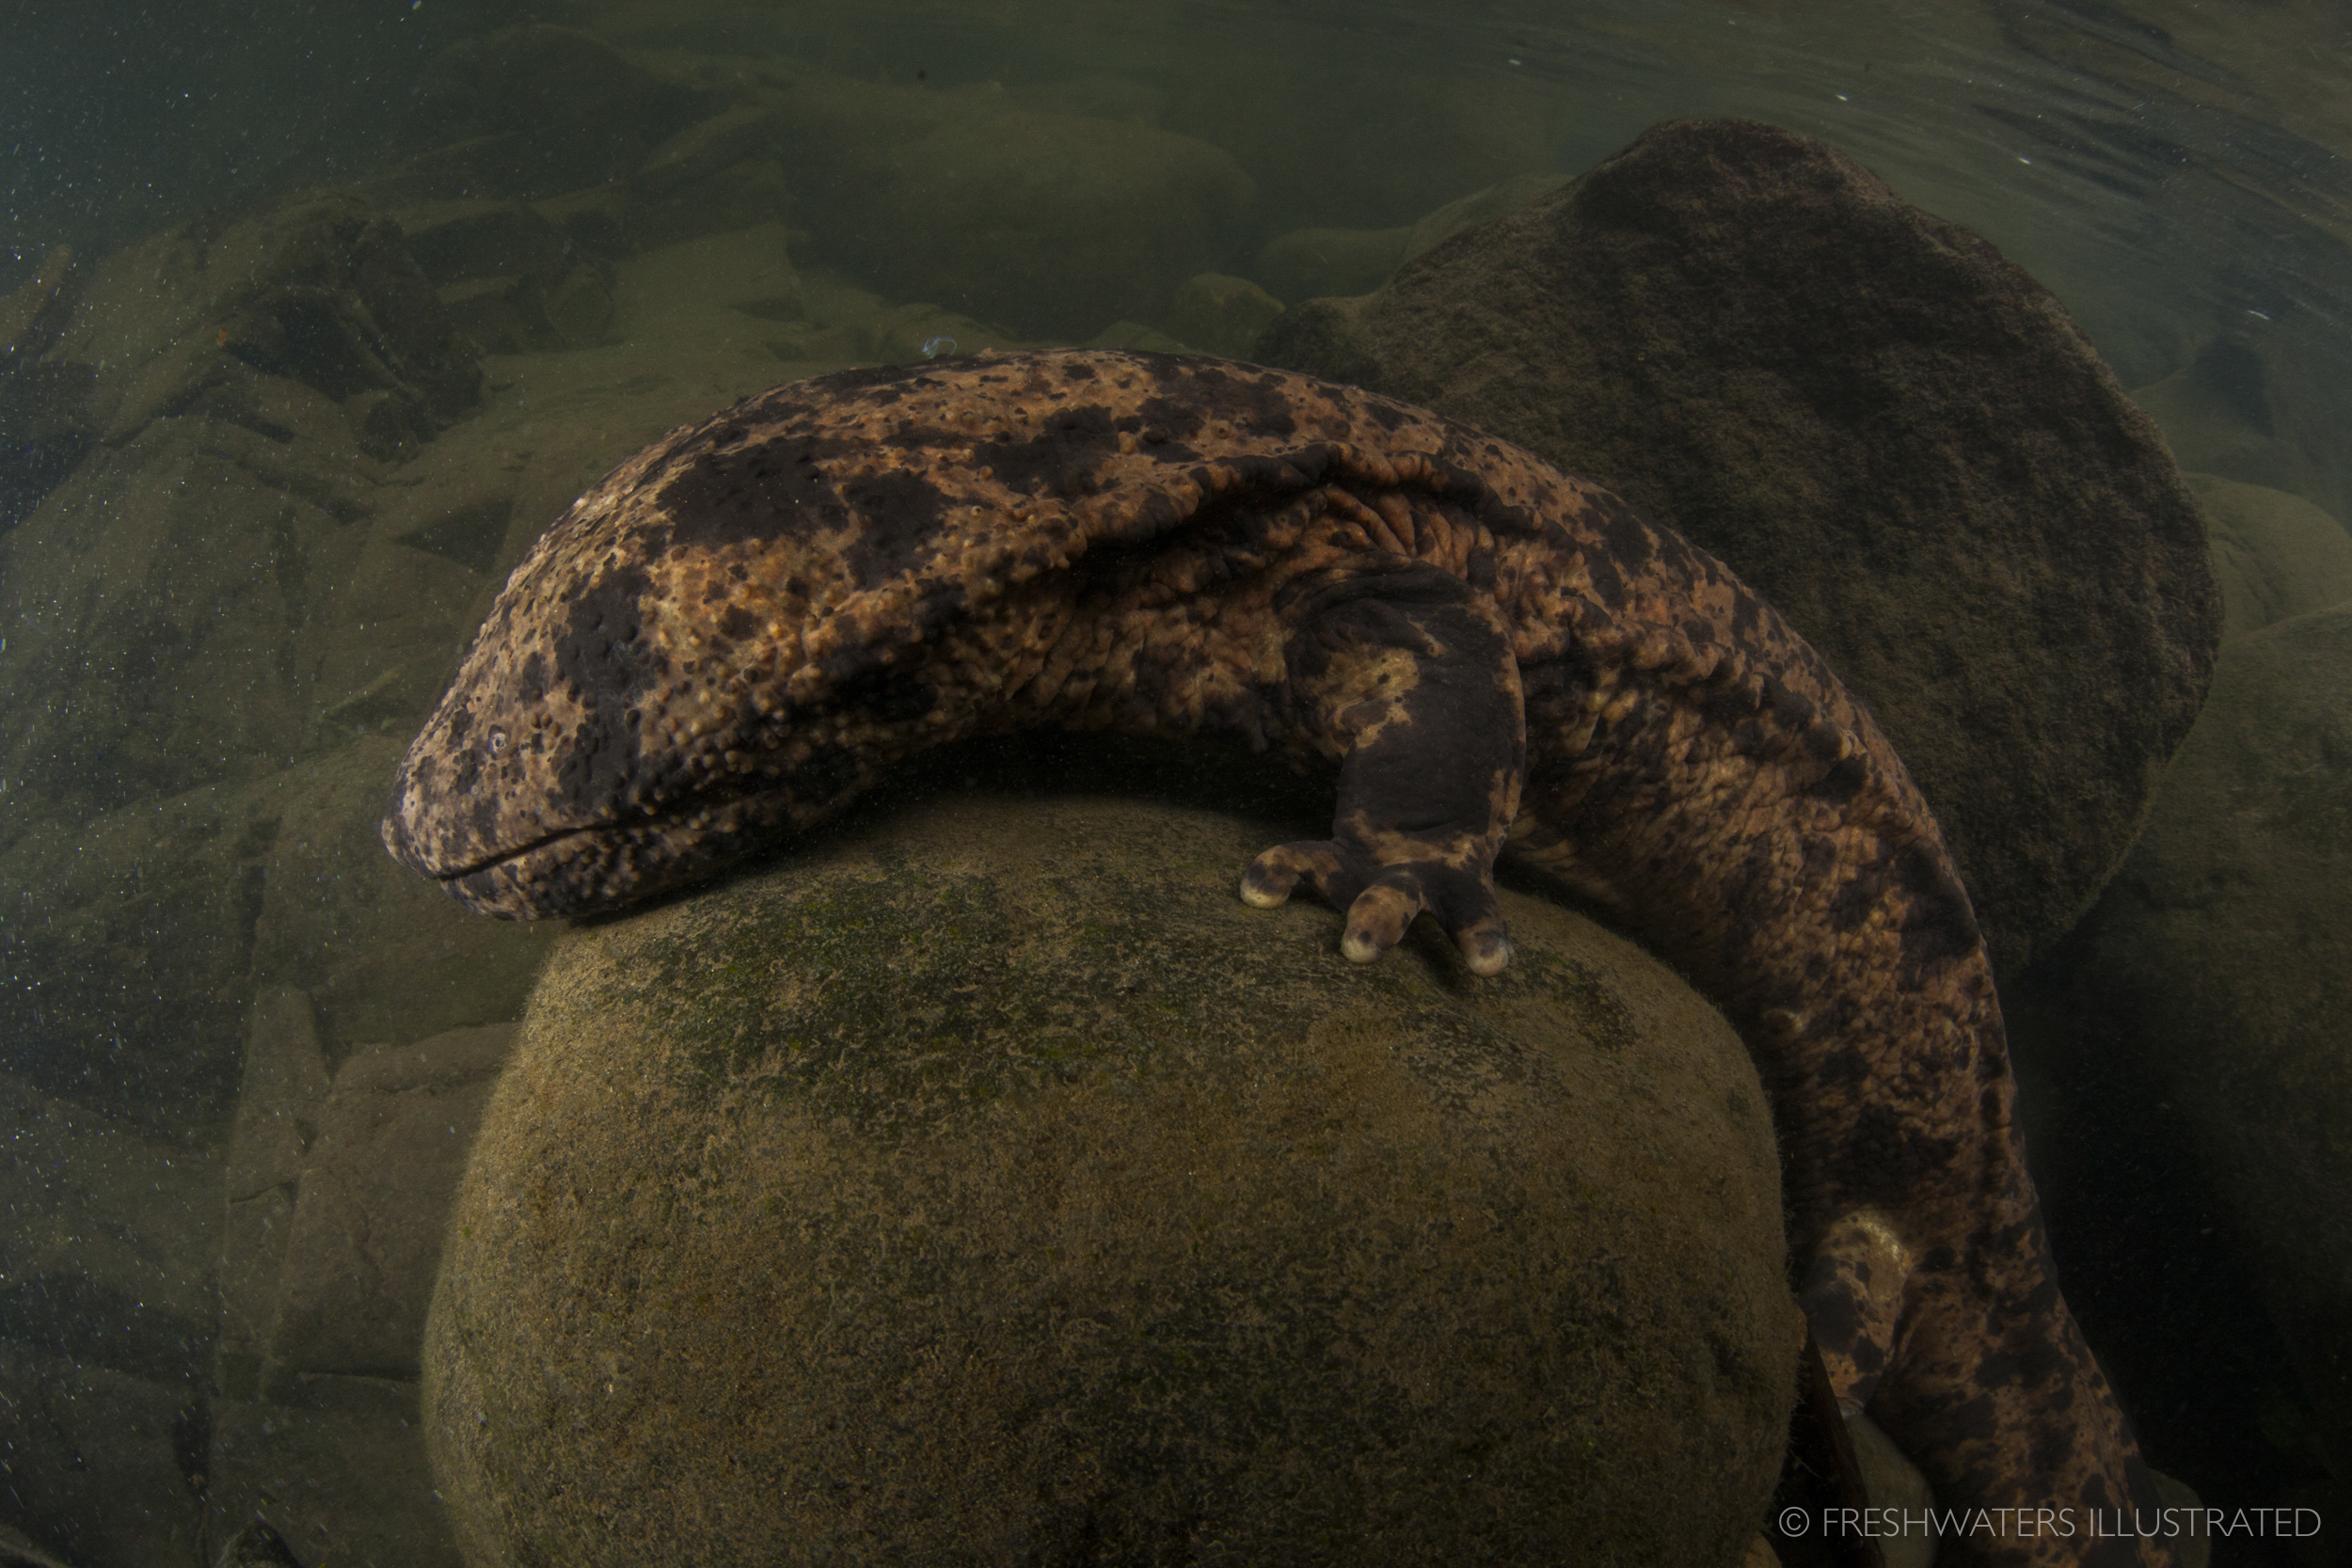  Japanese giant salamander (Andrias japonicus) Japan  www.FreshwatersIllustrated.org  